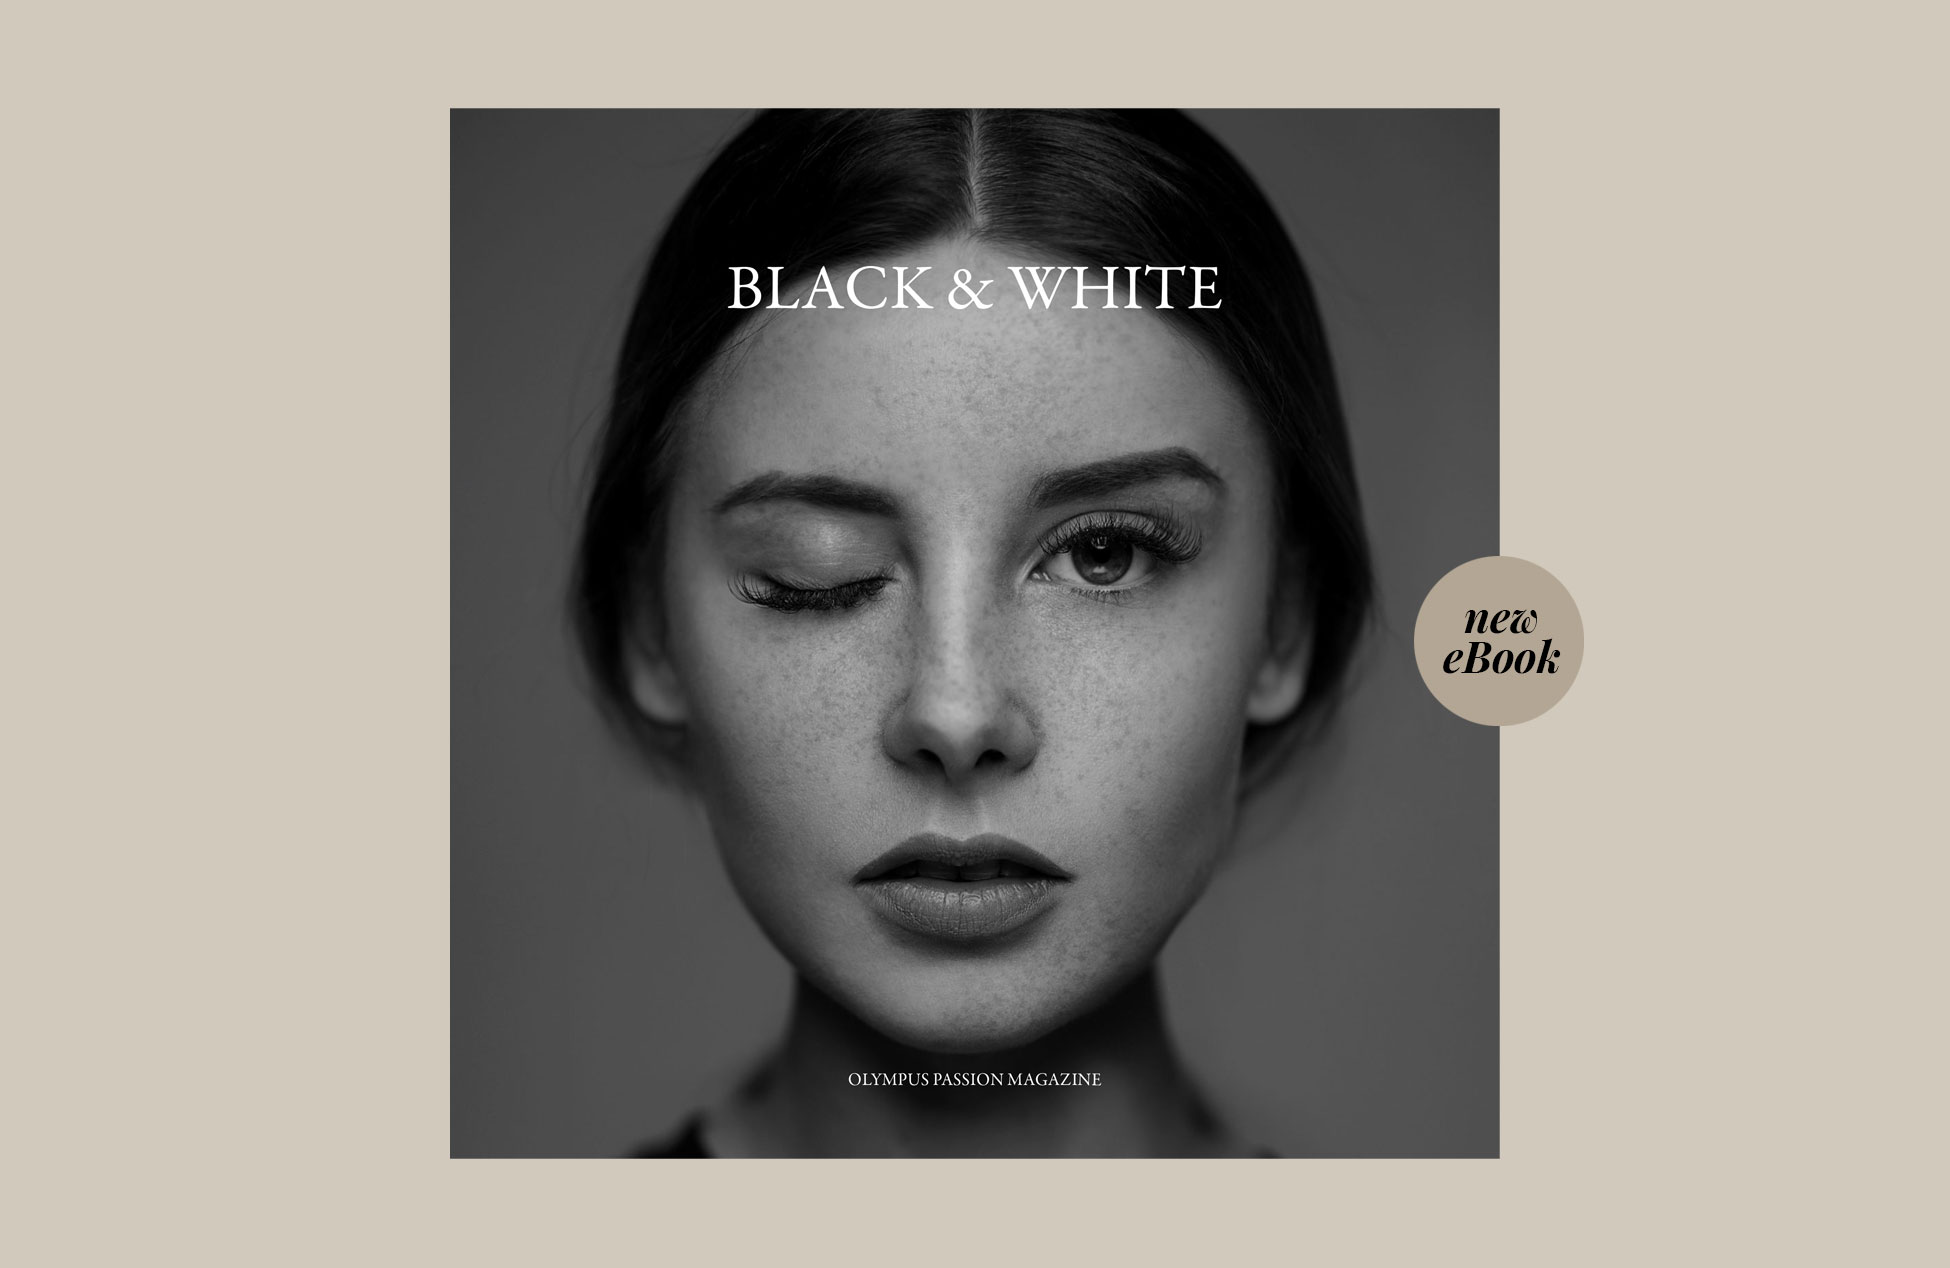 New eBook Black & White